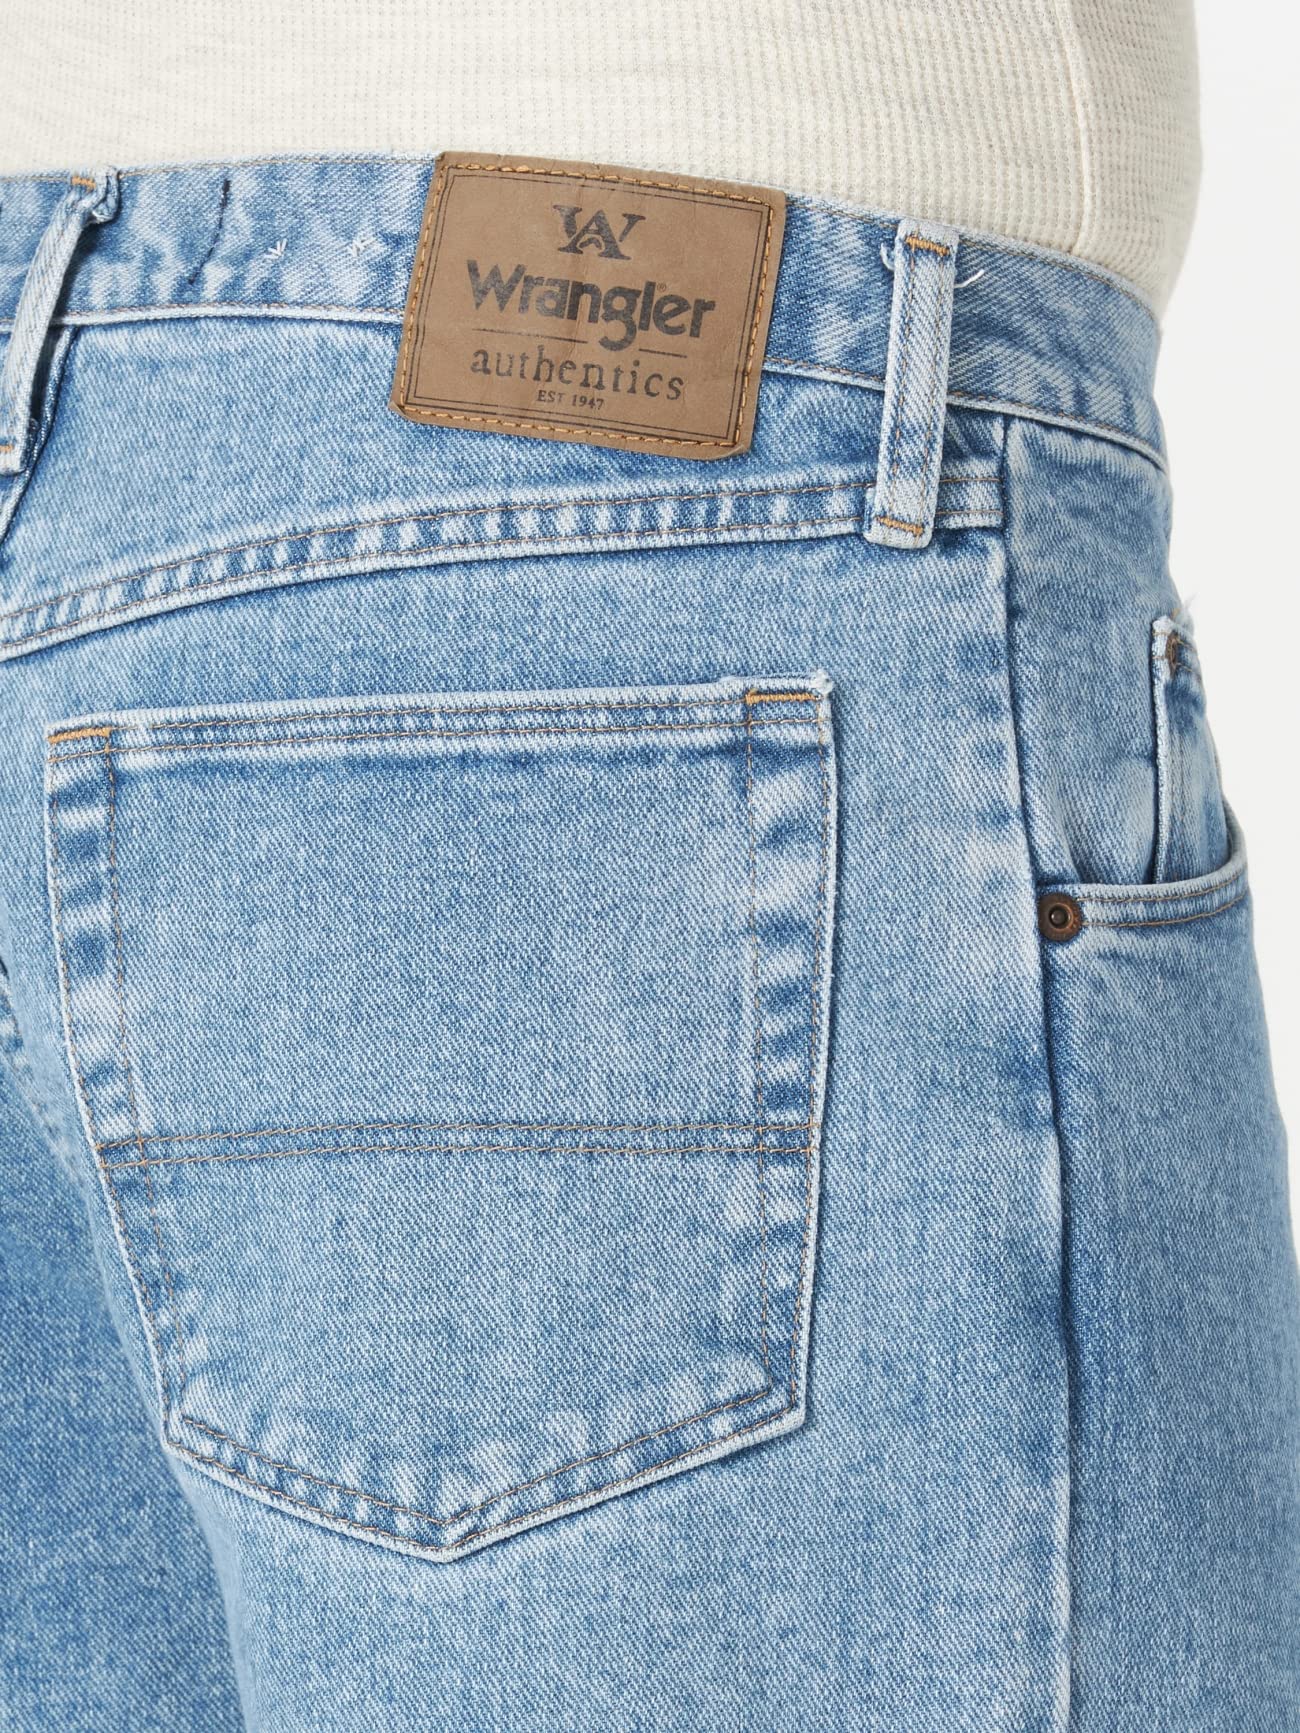 Wrangler Authentics Men's Classic 5-Pocket Relaxed Fit Cotton Jean, Stone Bleach, 33W x 32L